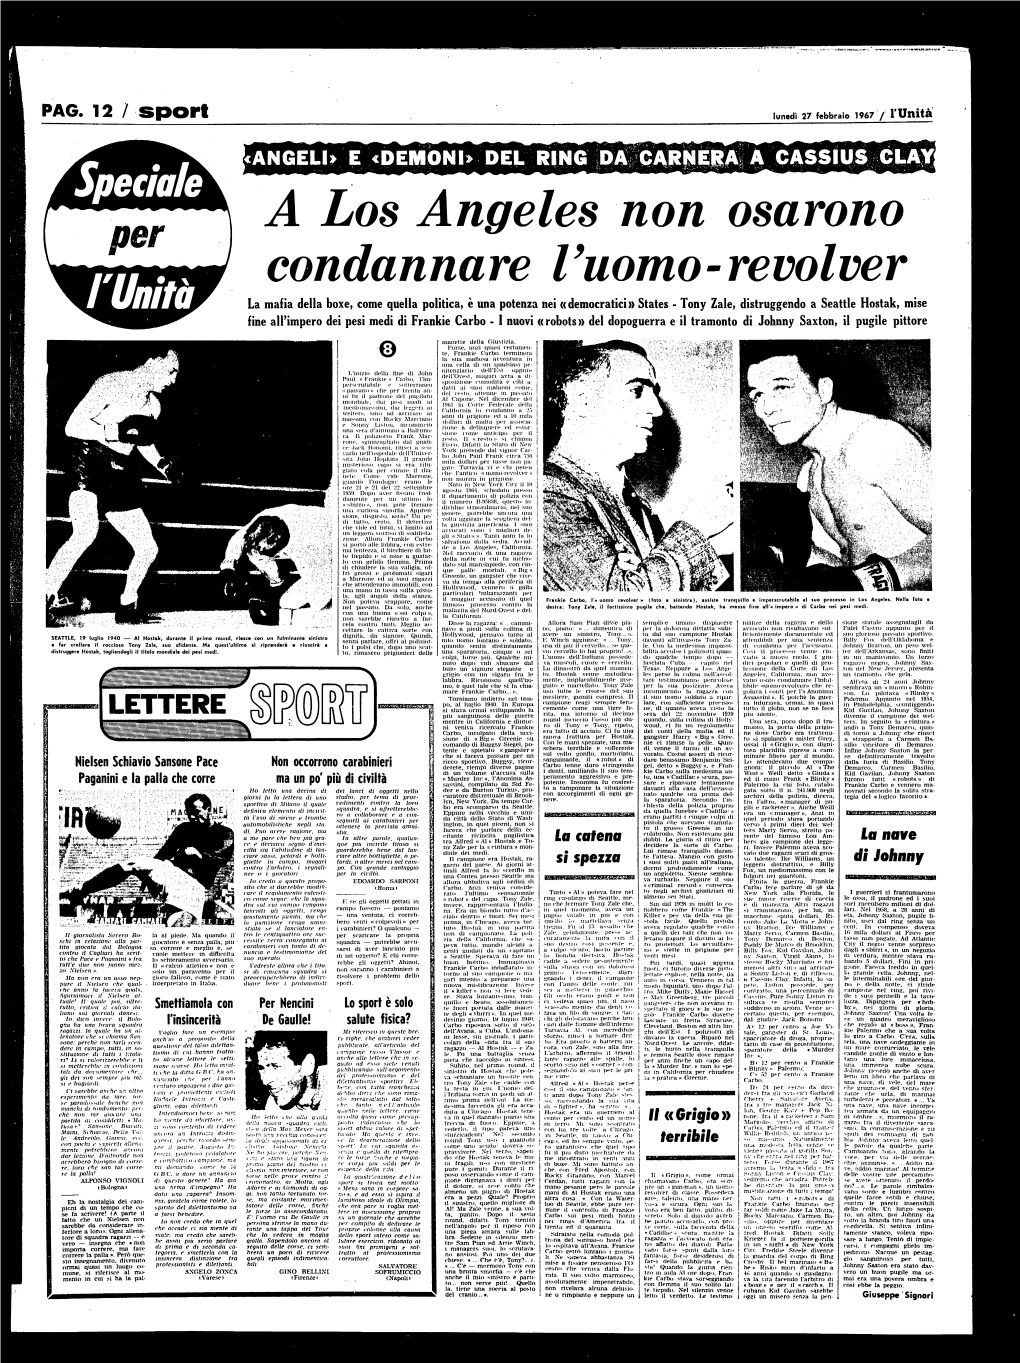 PAG. 12 /Sport Lunedi 27 Febbraio 1967 / Fumta